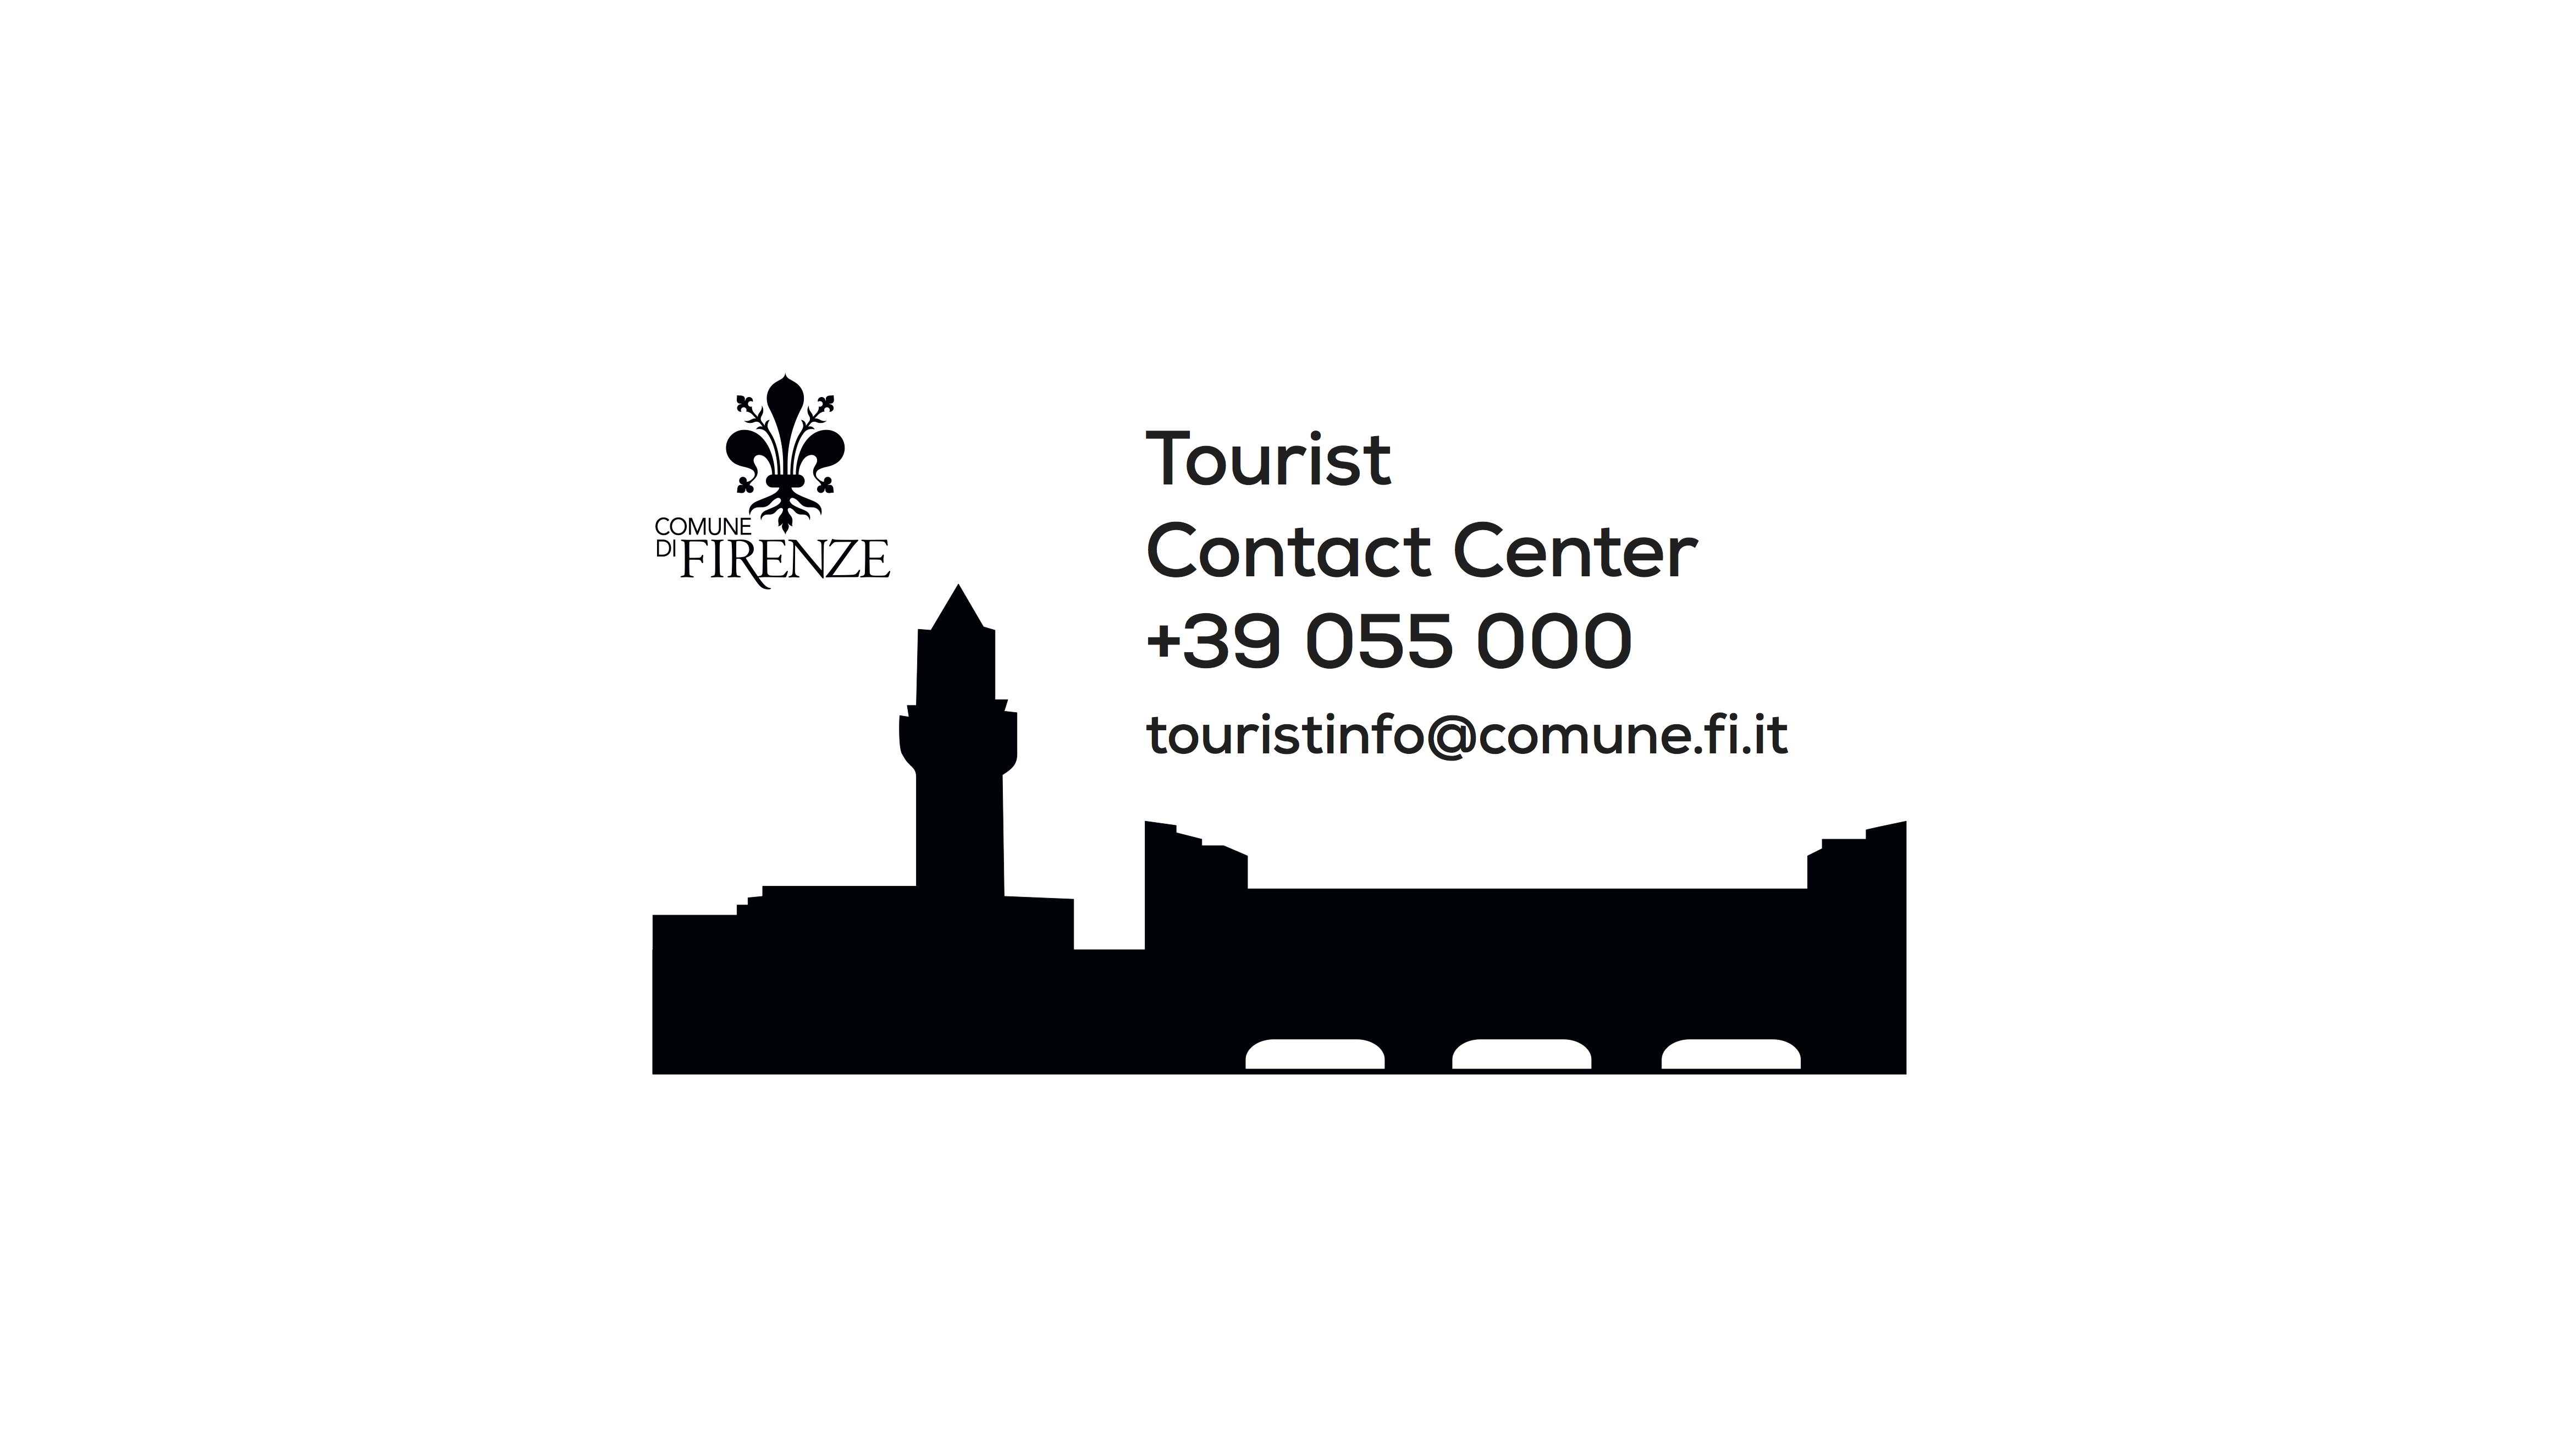 Tourist Contact Center